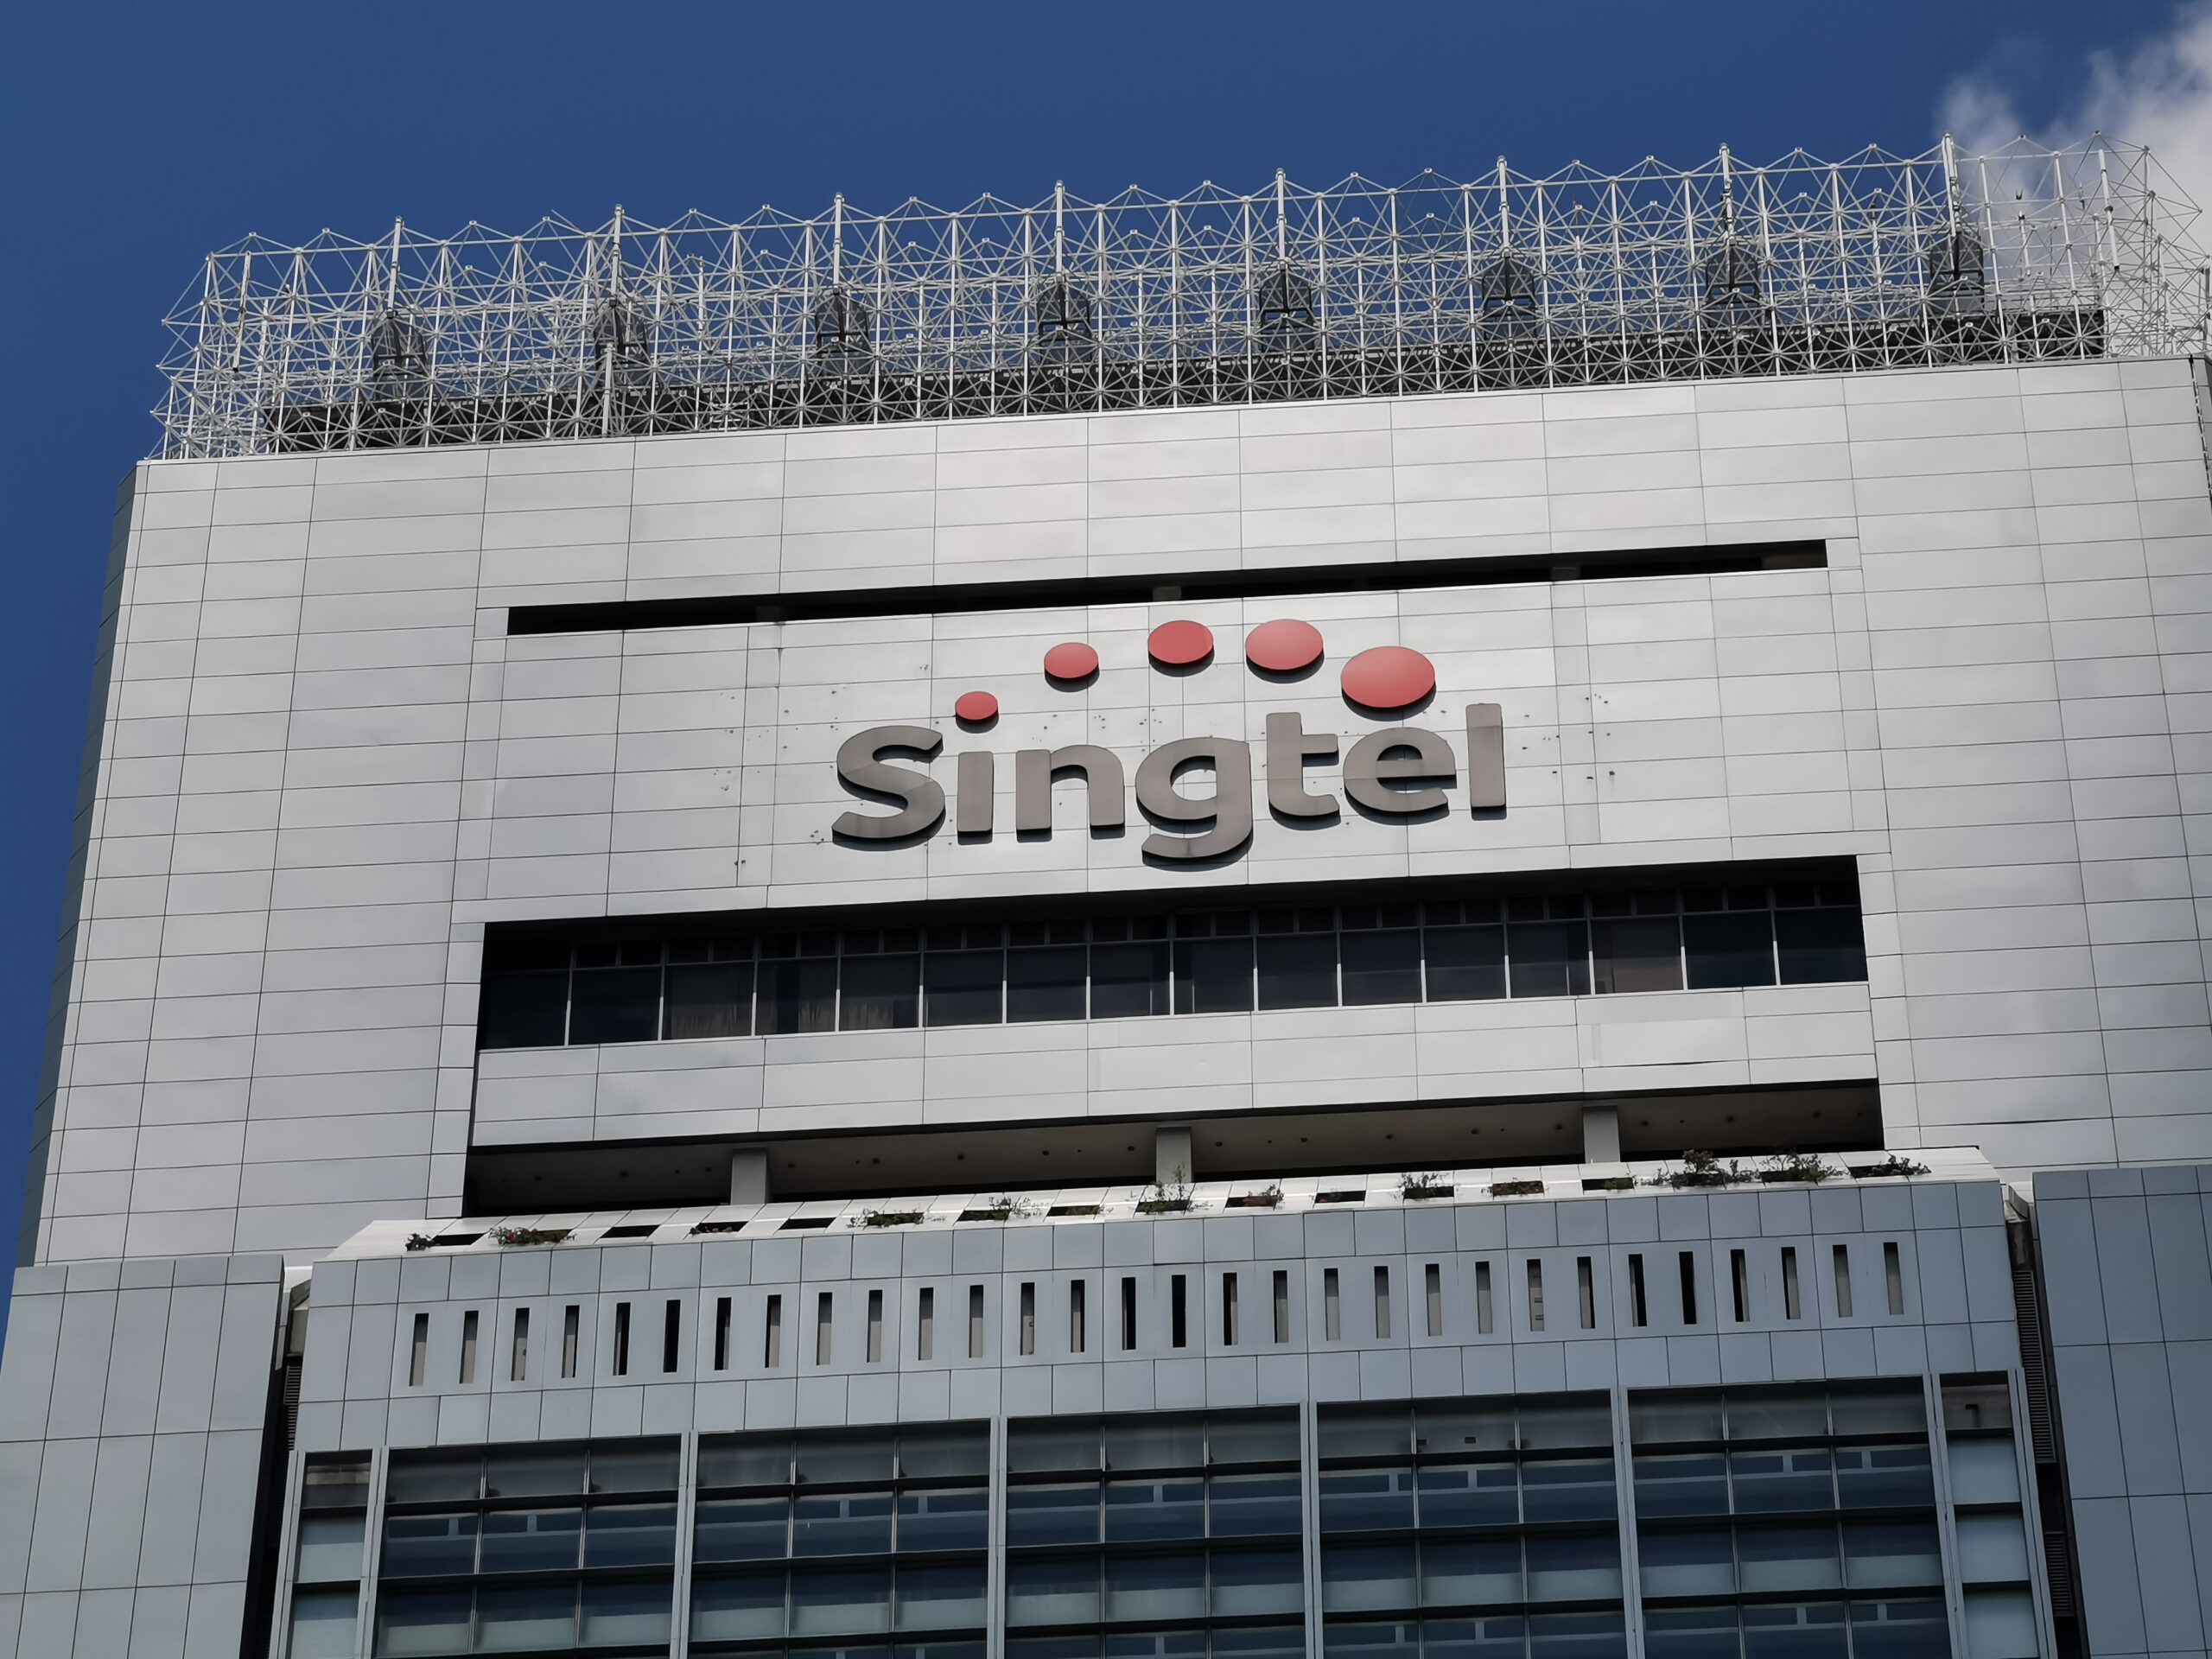 SingTel's annual profit plunges by over 50% due to a US$2.3 billion impairment charge